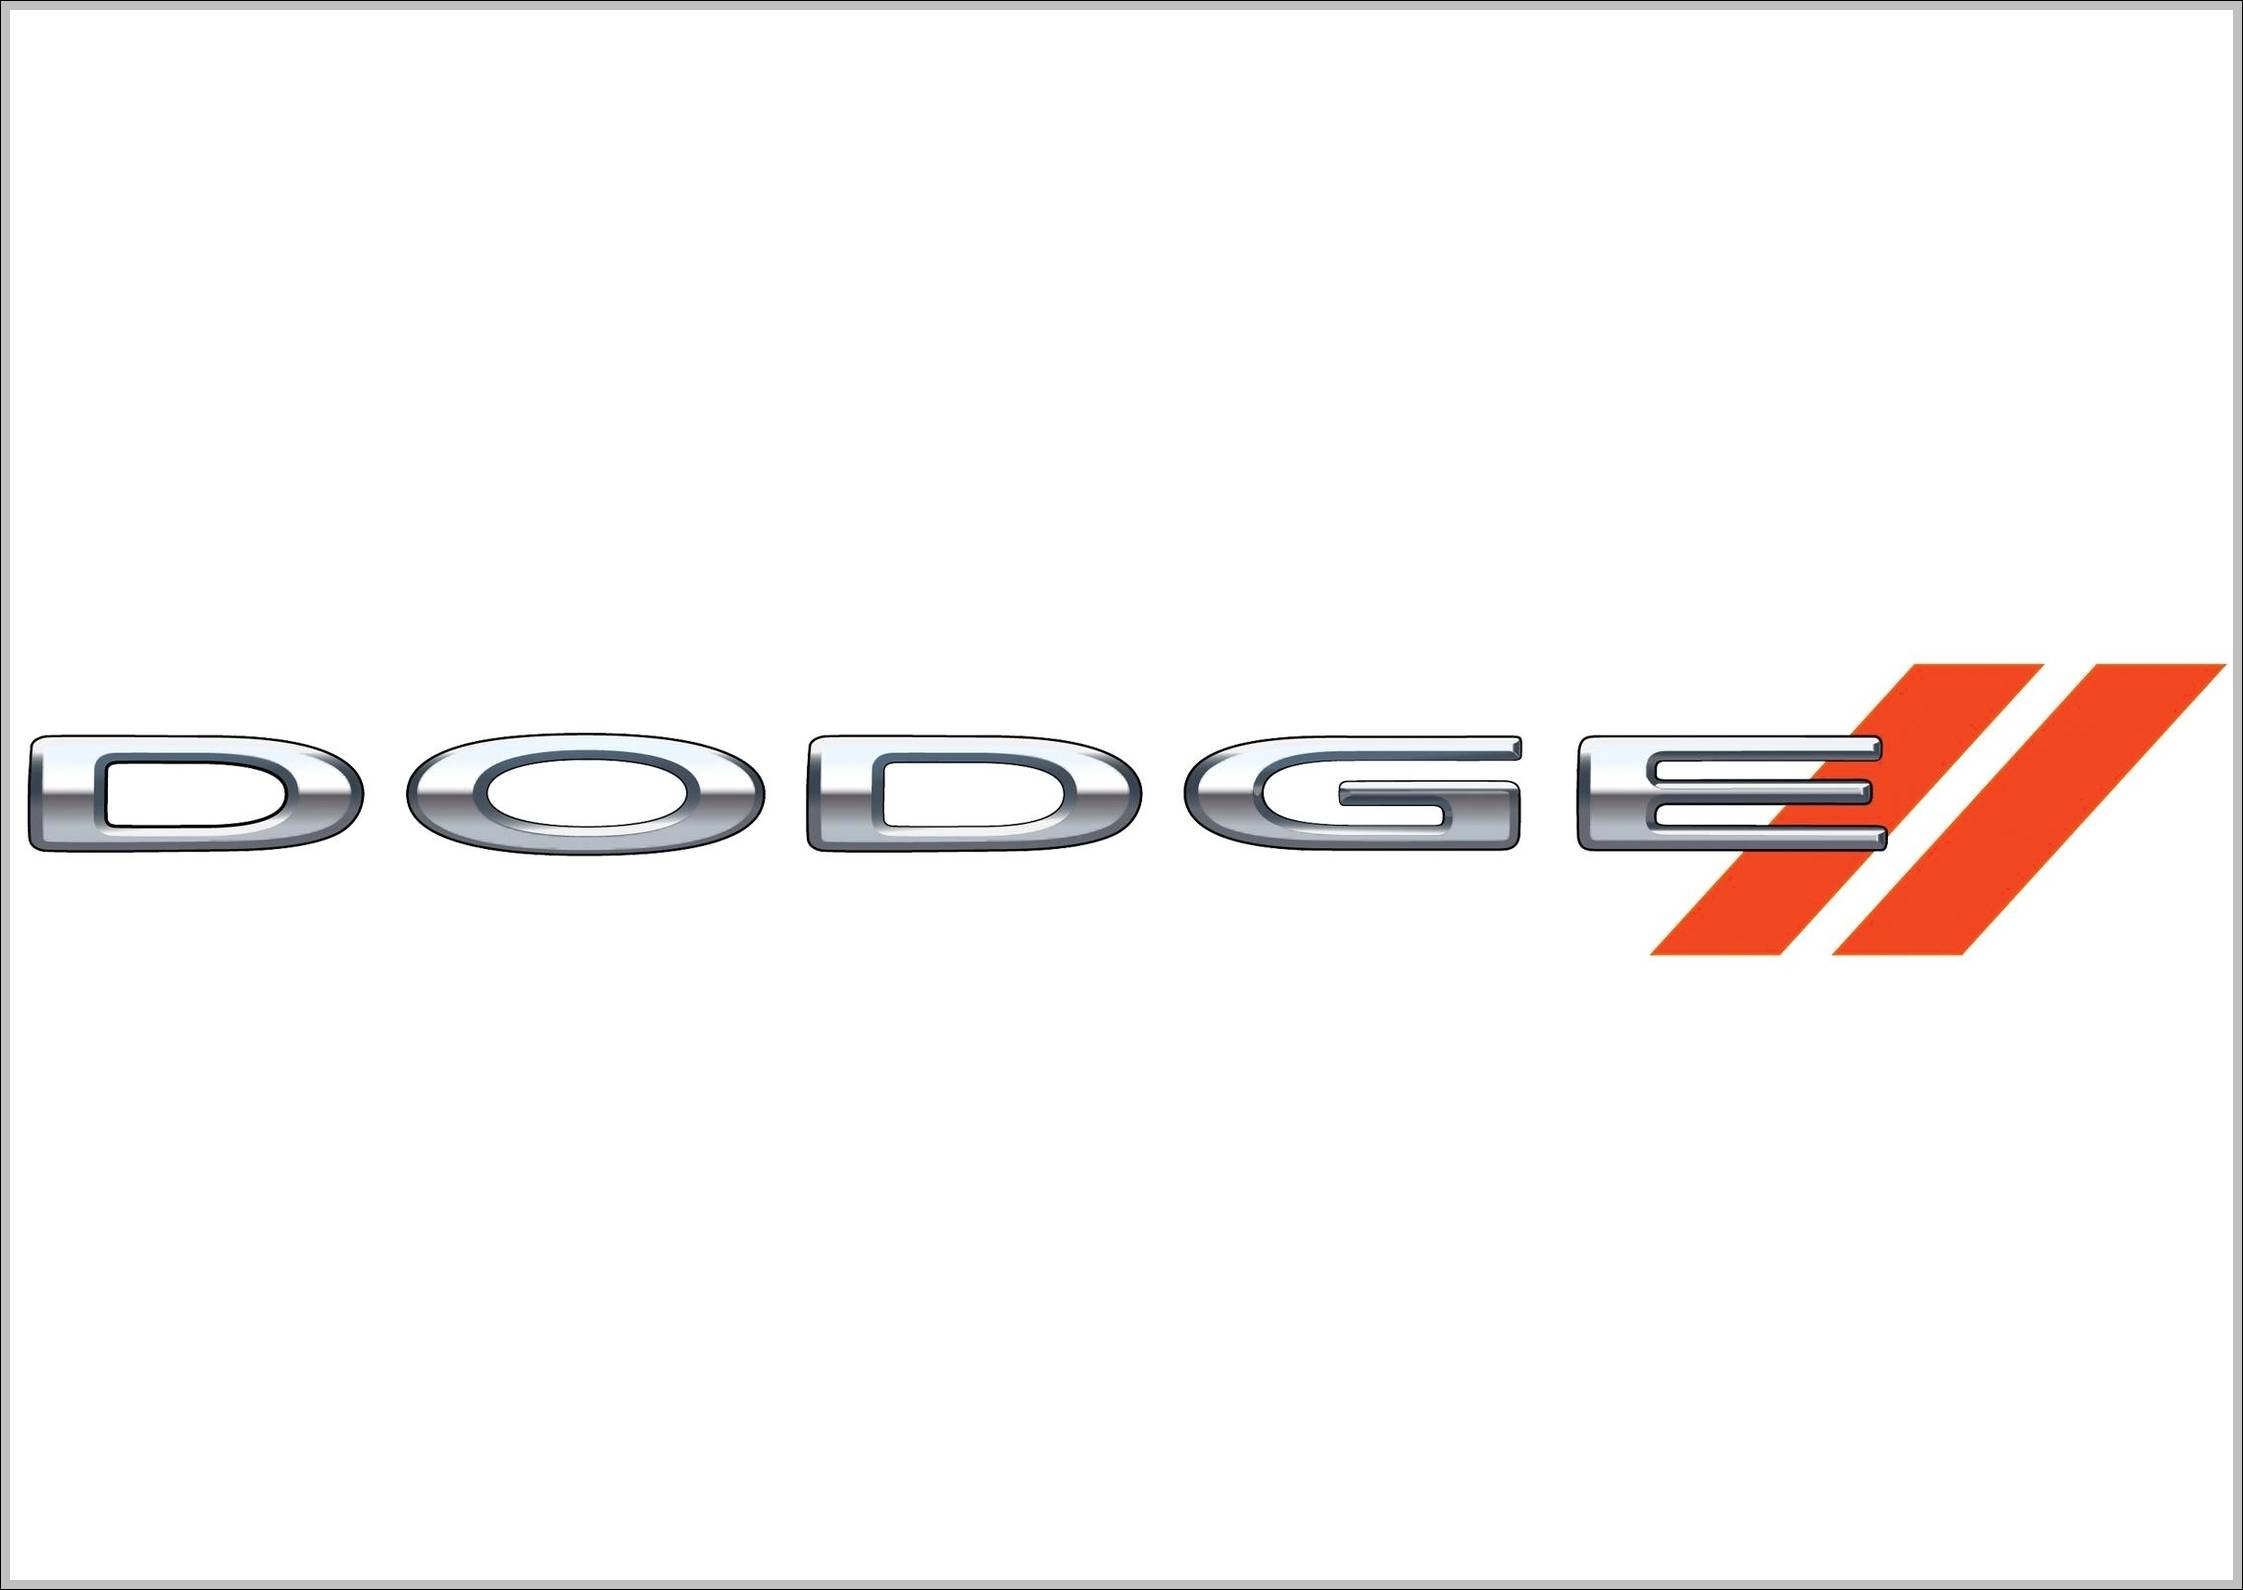 Dodge sign